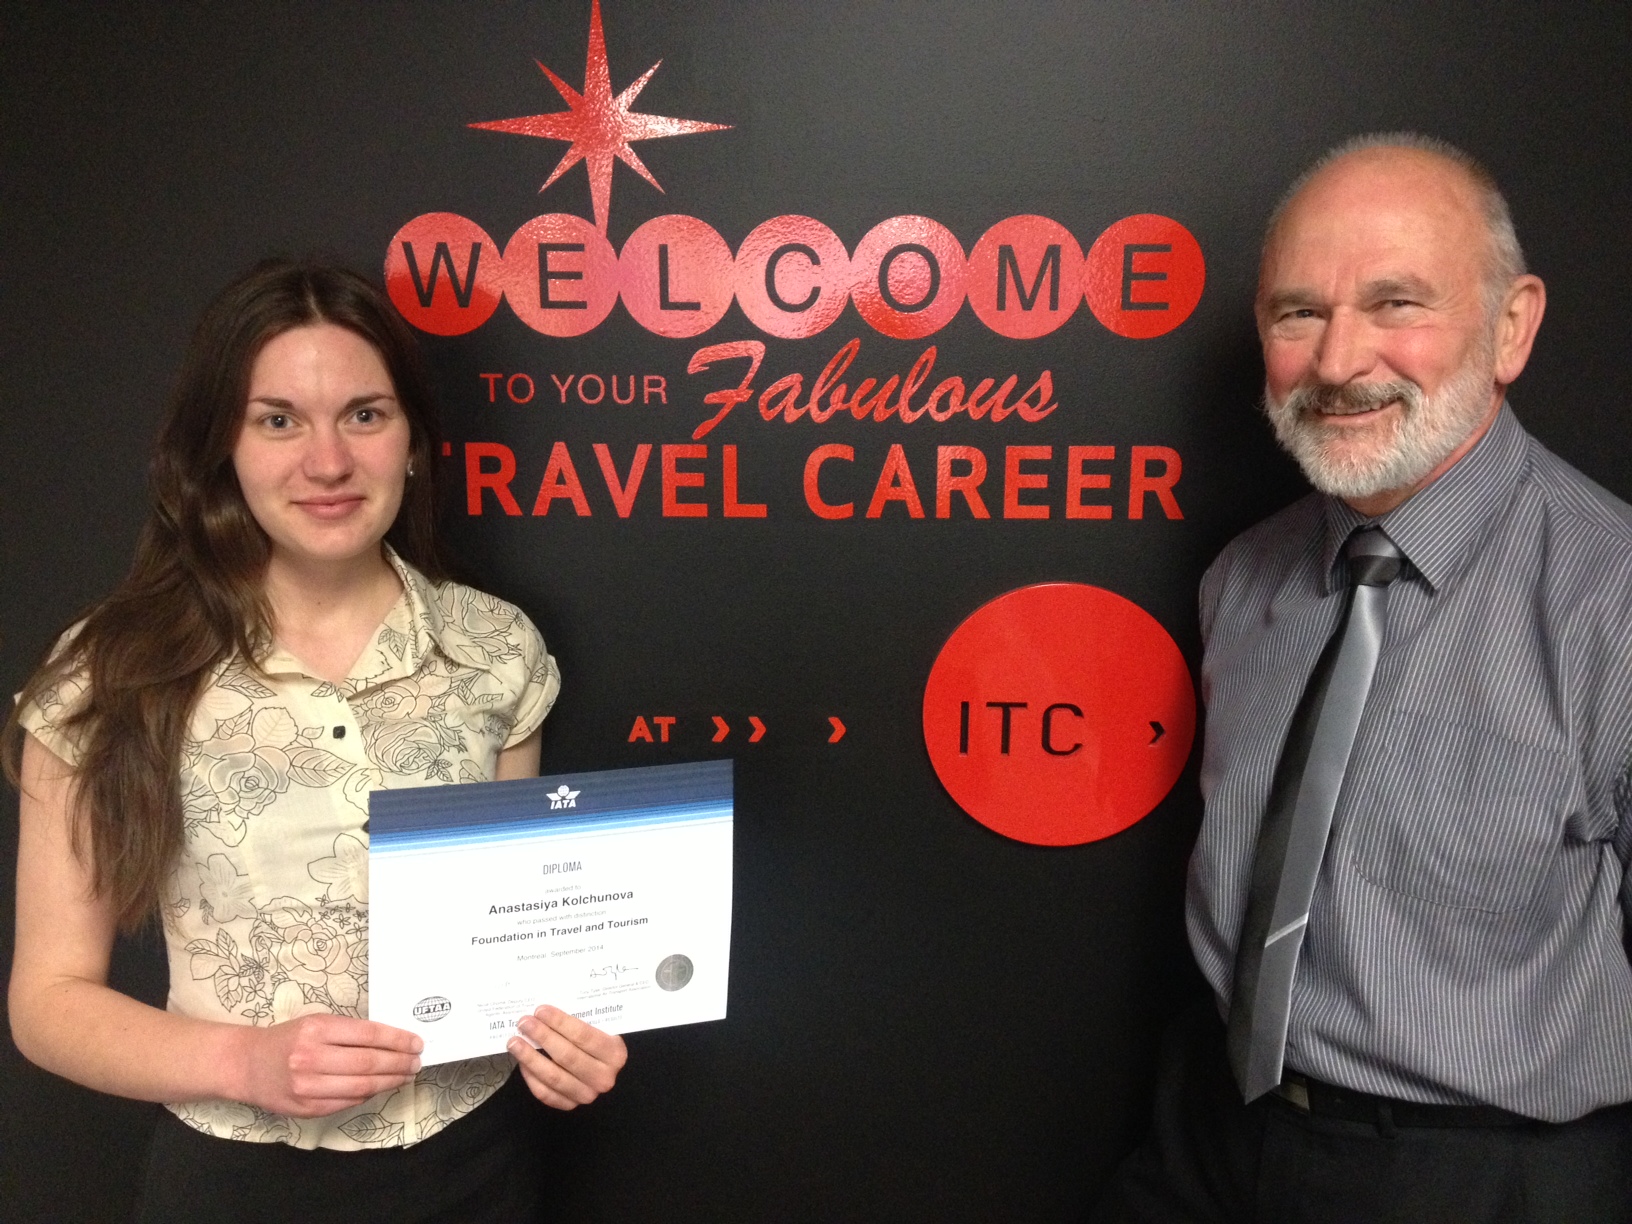 International Travel College student Anastasiya Kolchunova is awarded her IATA Foundation Exam certificate by tutor Steve Burke